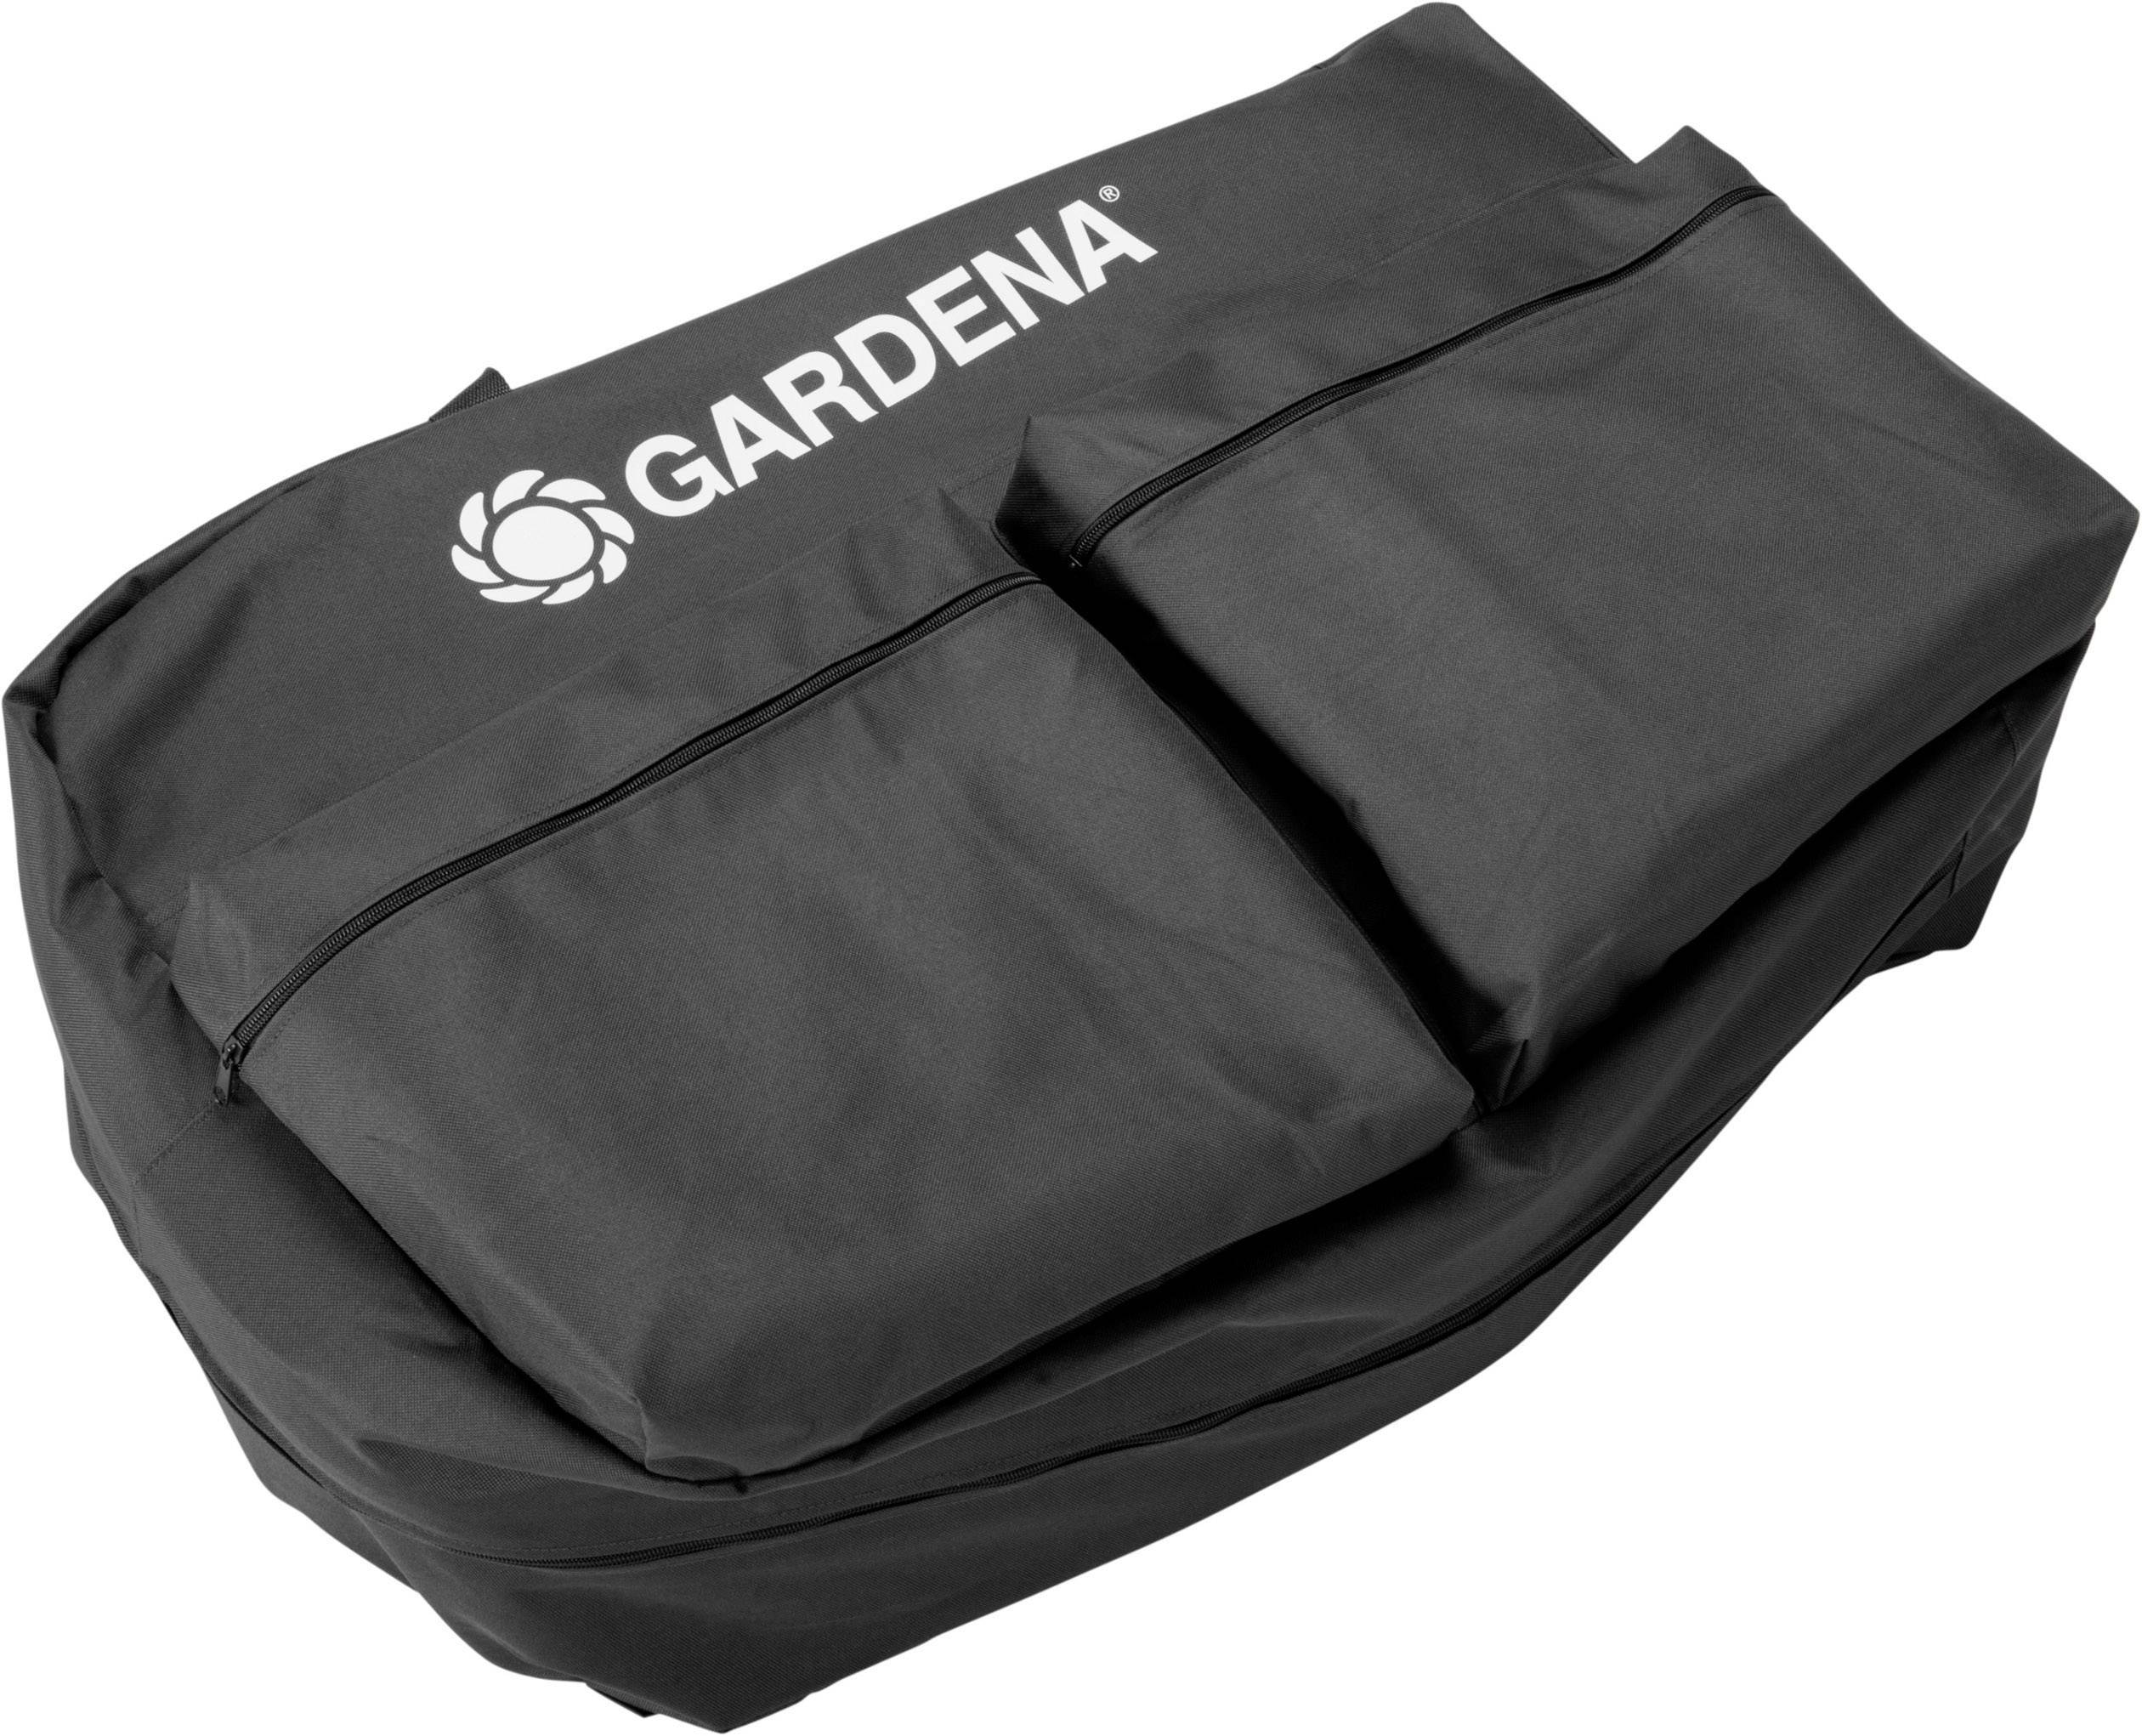 GARDENA 04057-20 Storage bag Suitable for (lgrass trimmer): Gardena .